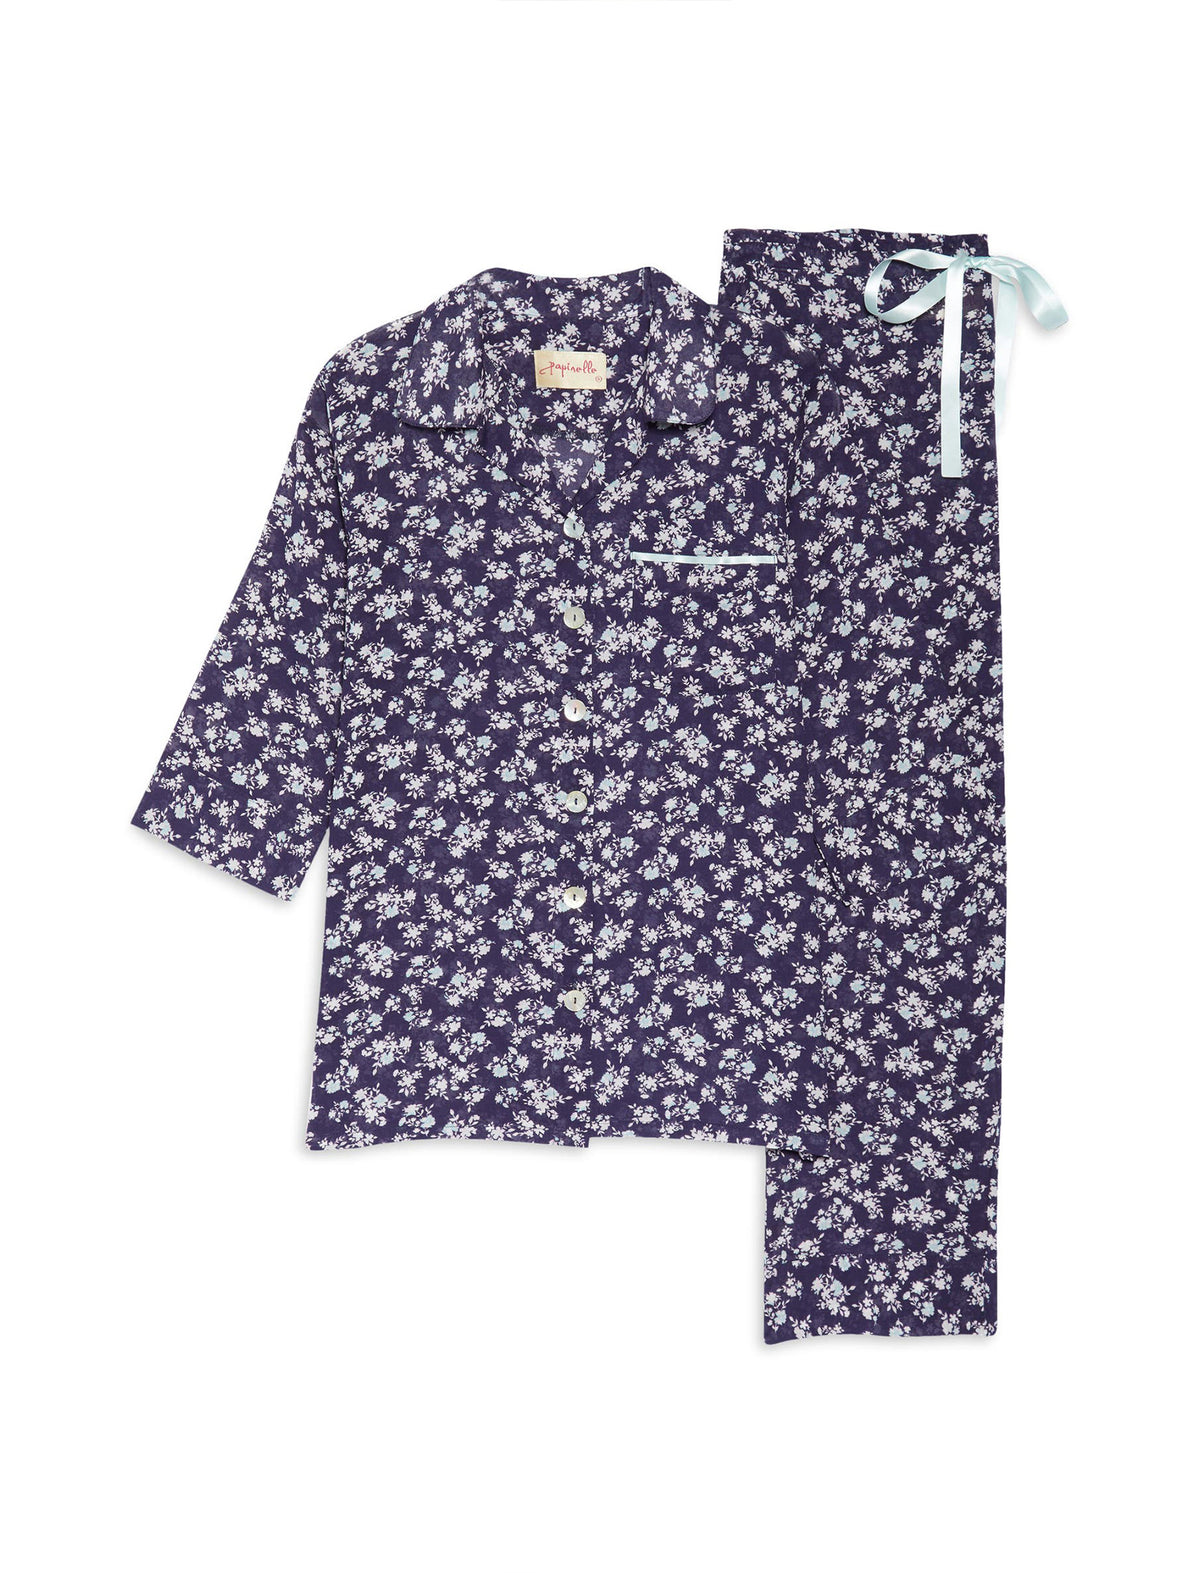 Papinelle | Potager Navy Cotton Crop Pajama - Papinelle Sleepwear US